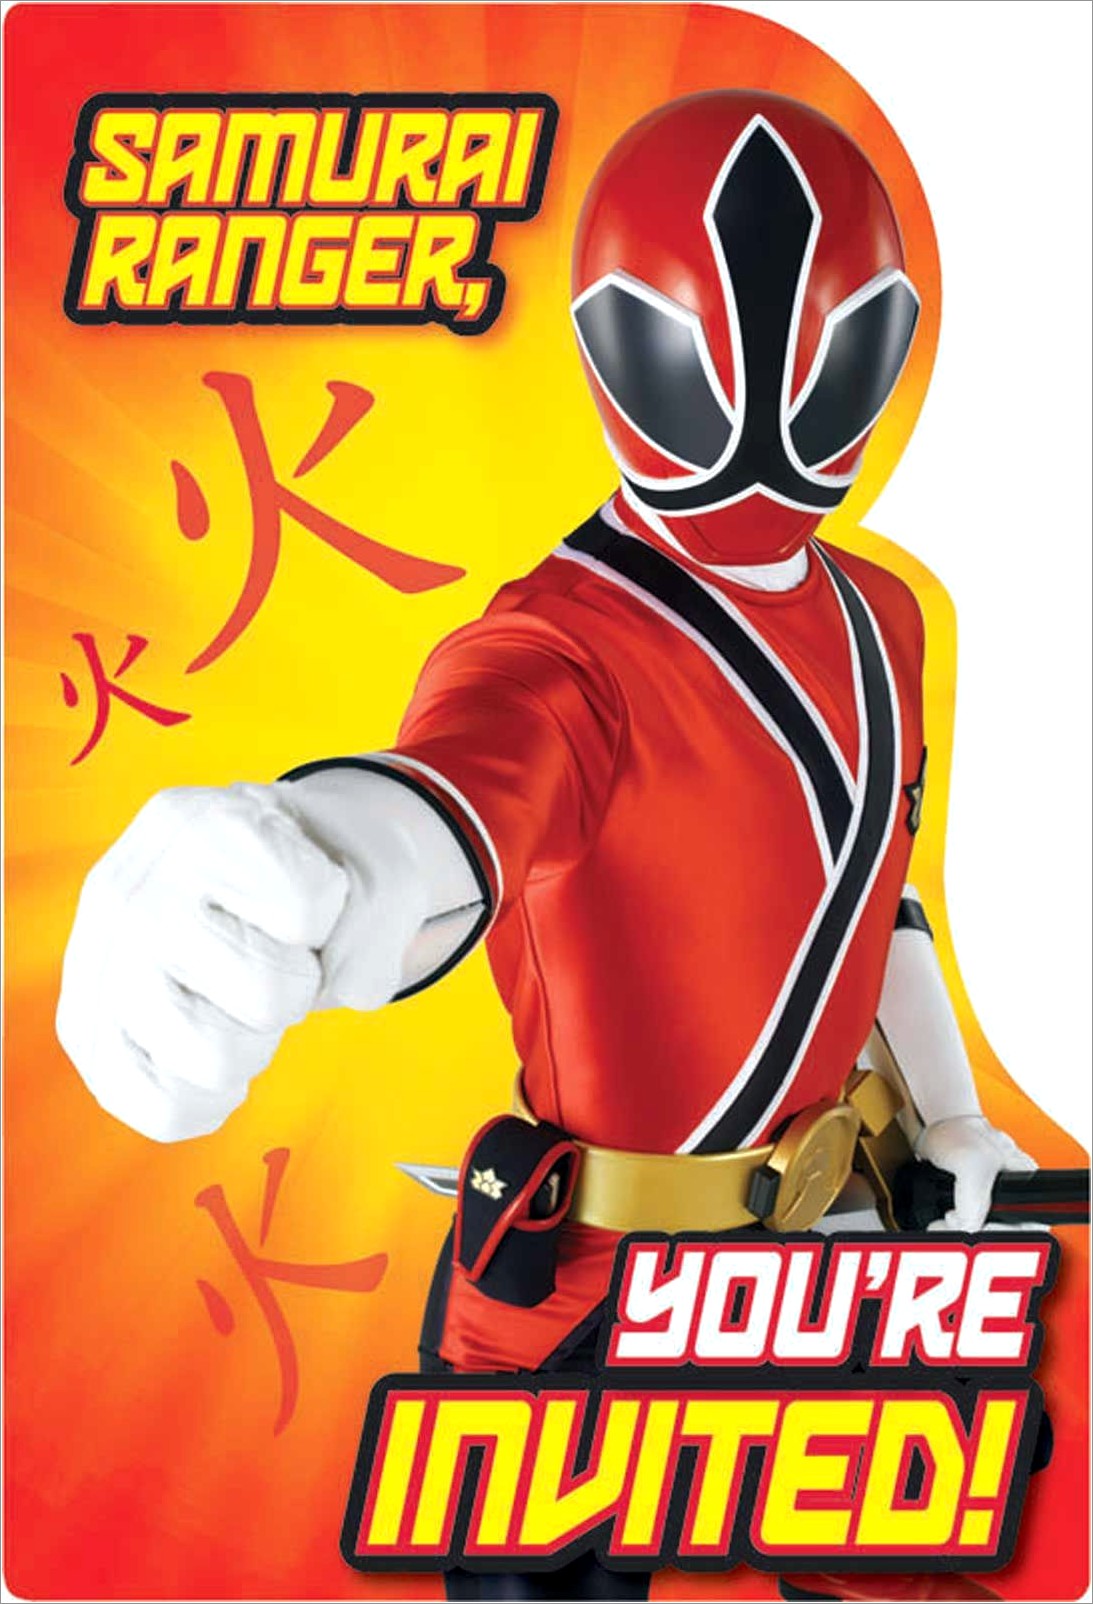 Power Ranger Invitations Template